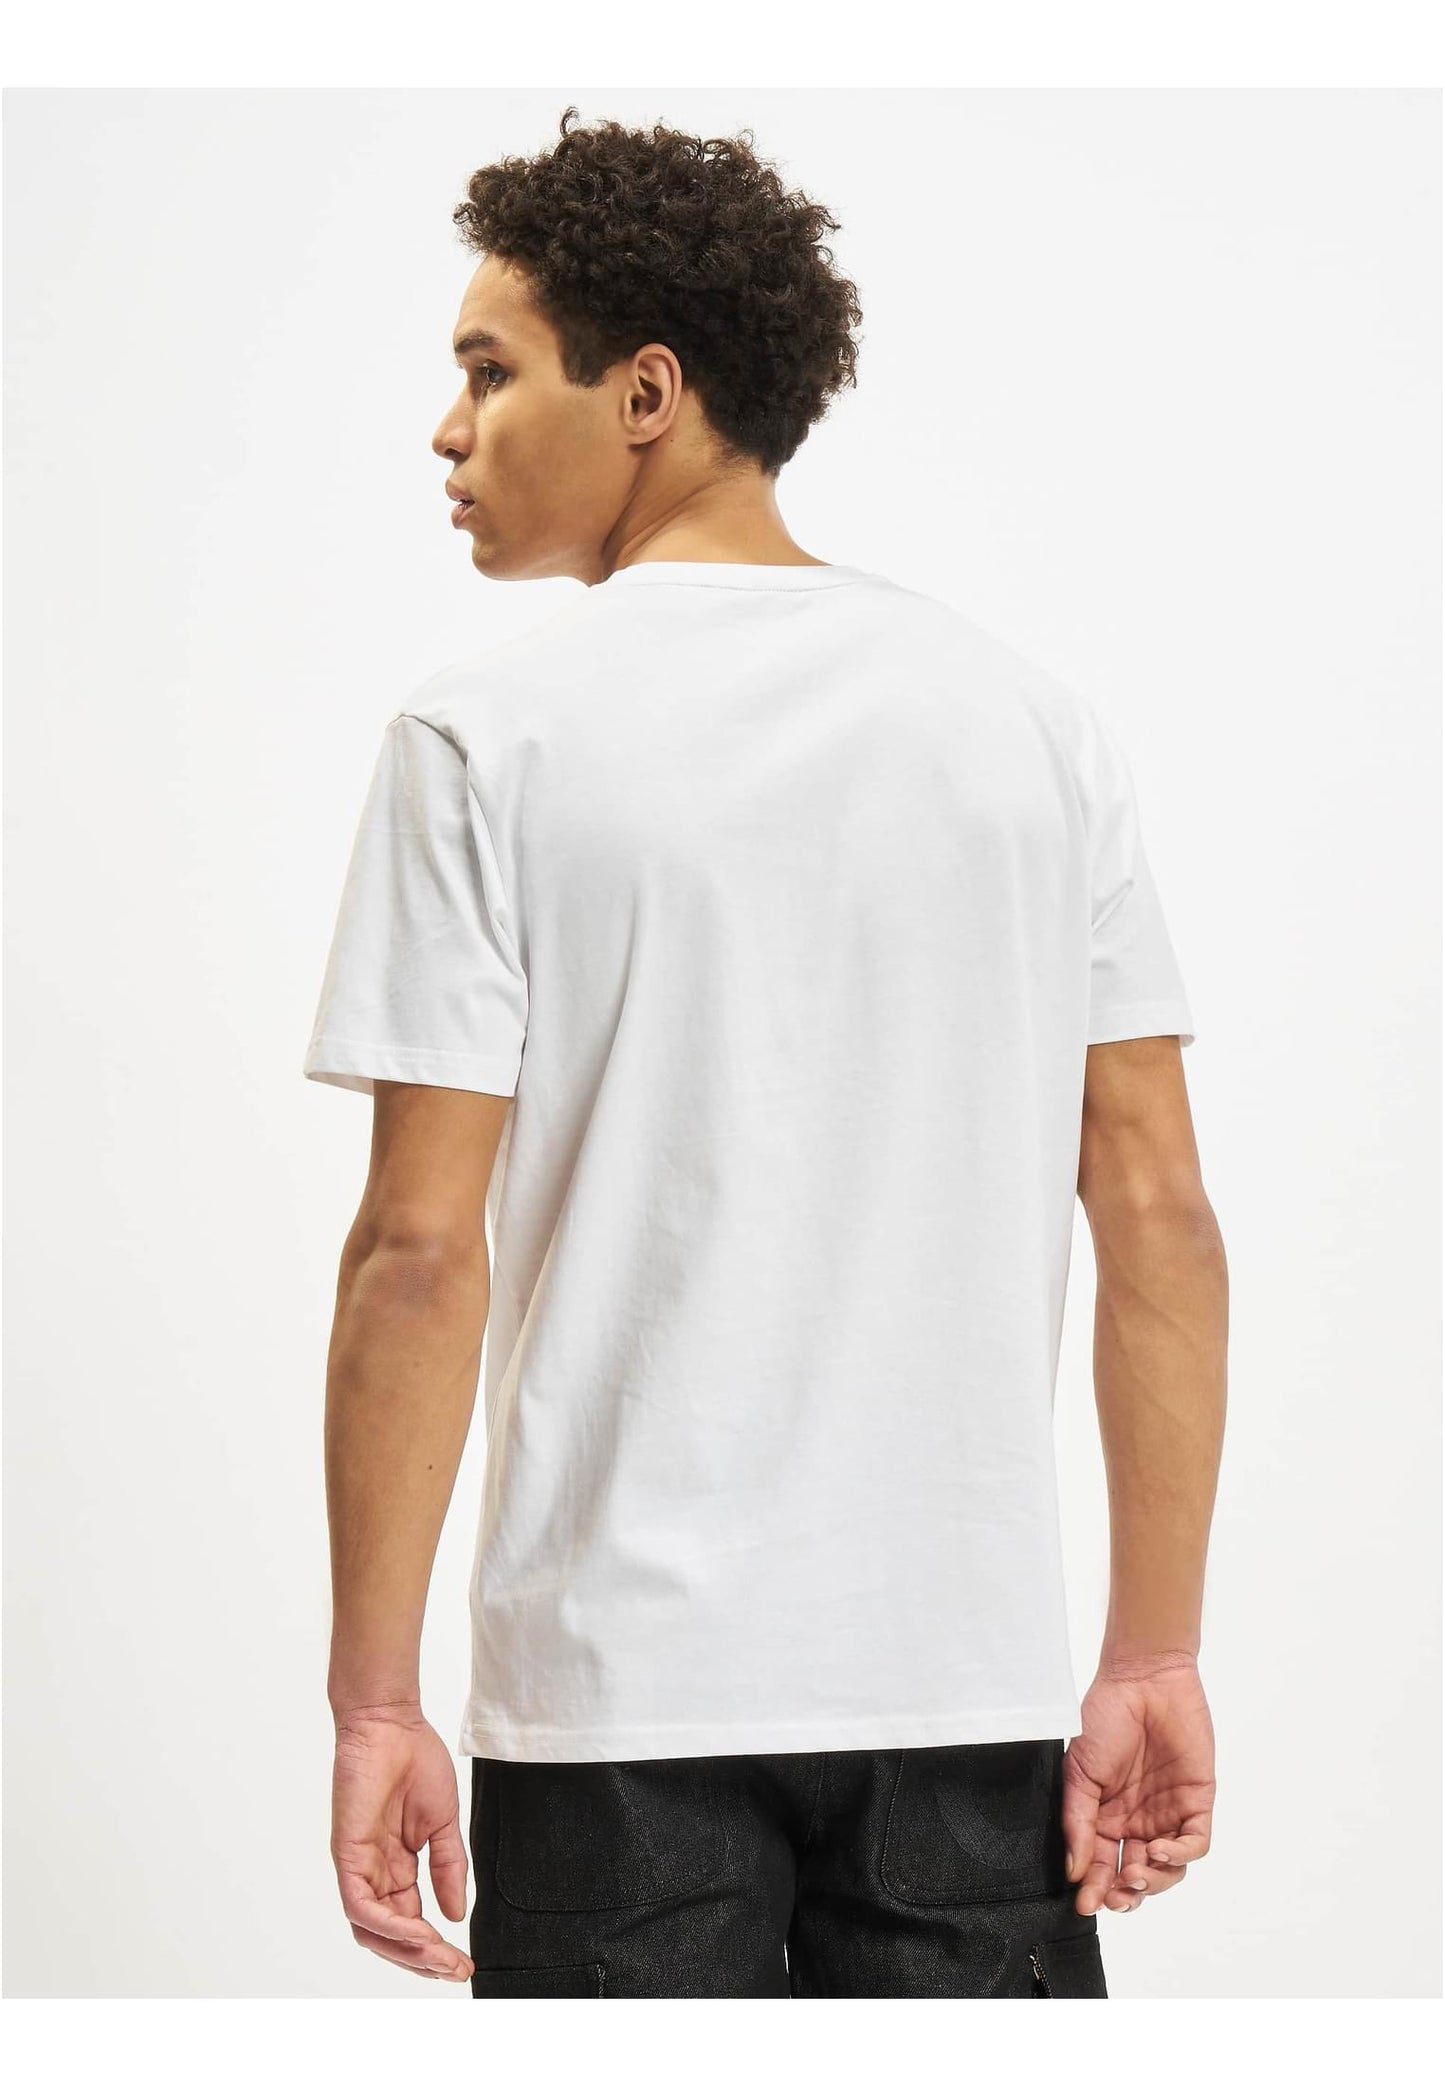 Ecko Unltd. Young T-Shirt white